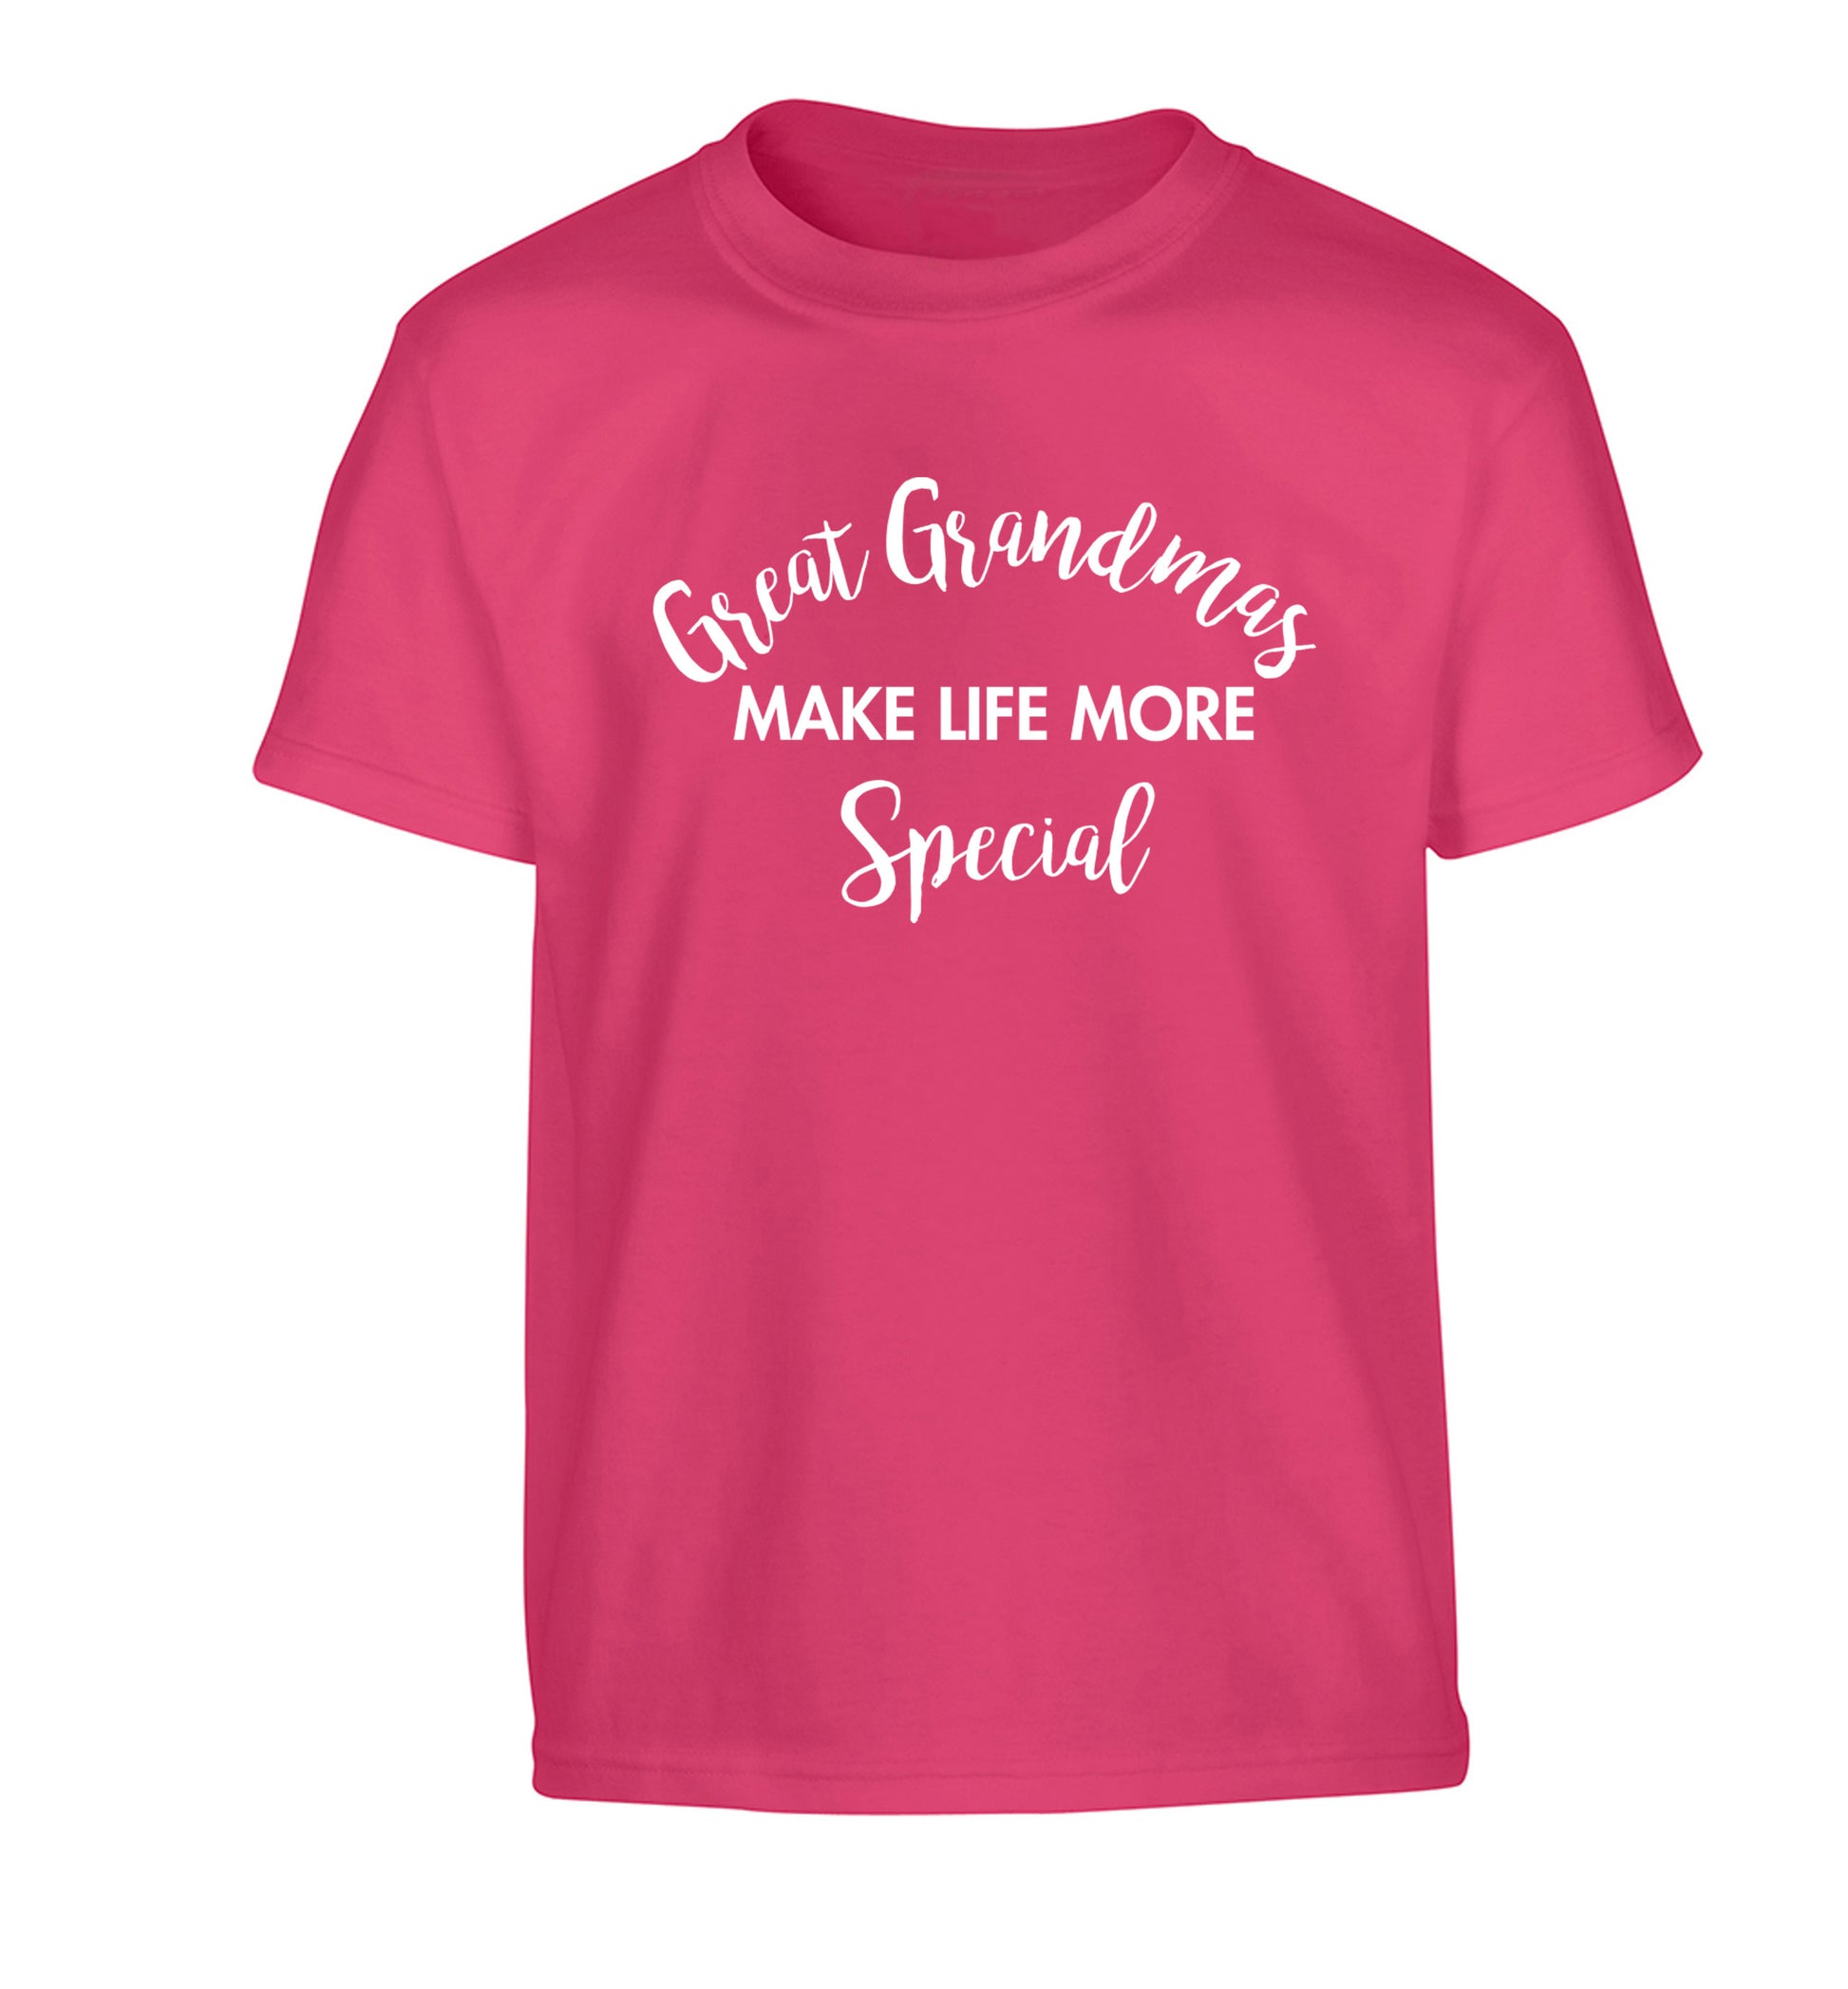 Great Grandmas make life more special Children's pink Tshirt 12-14 Years